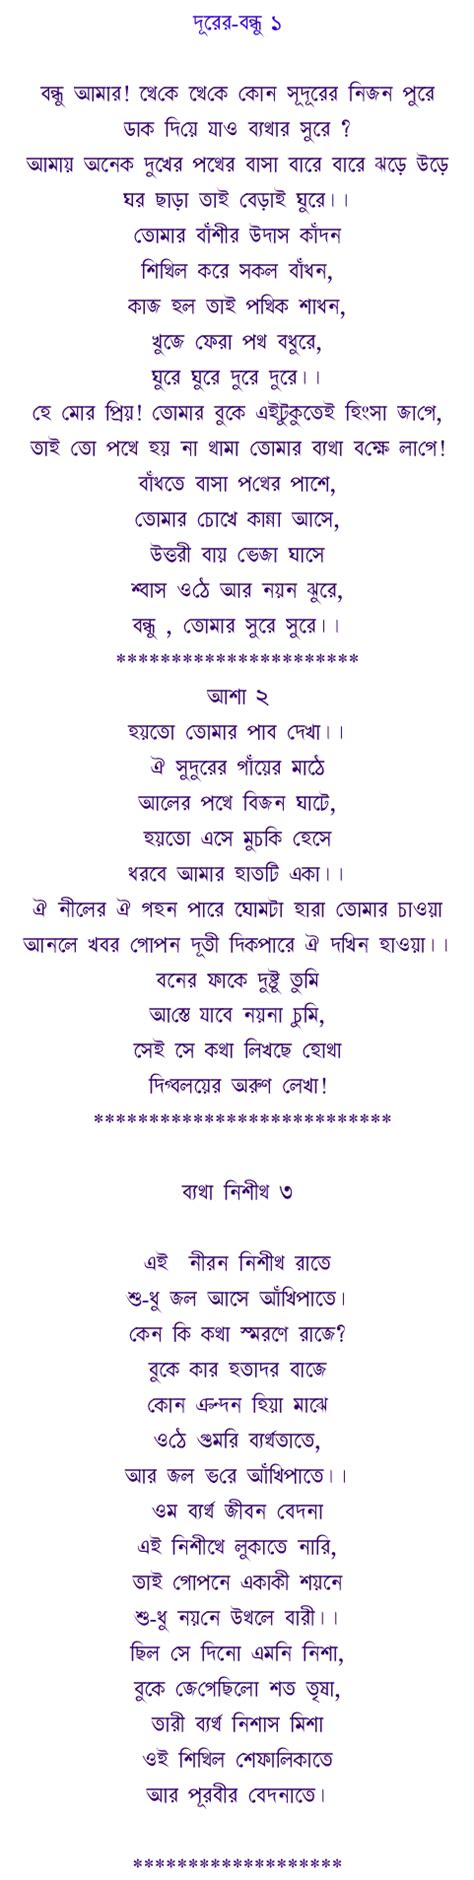 Bangla poem by rabindranath tagore | knowledge